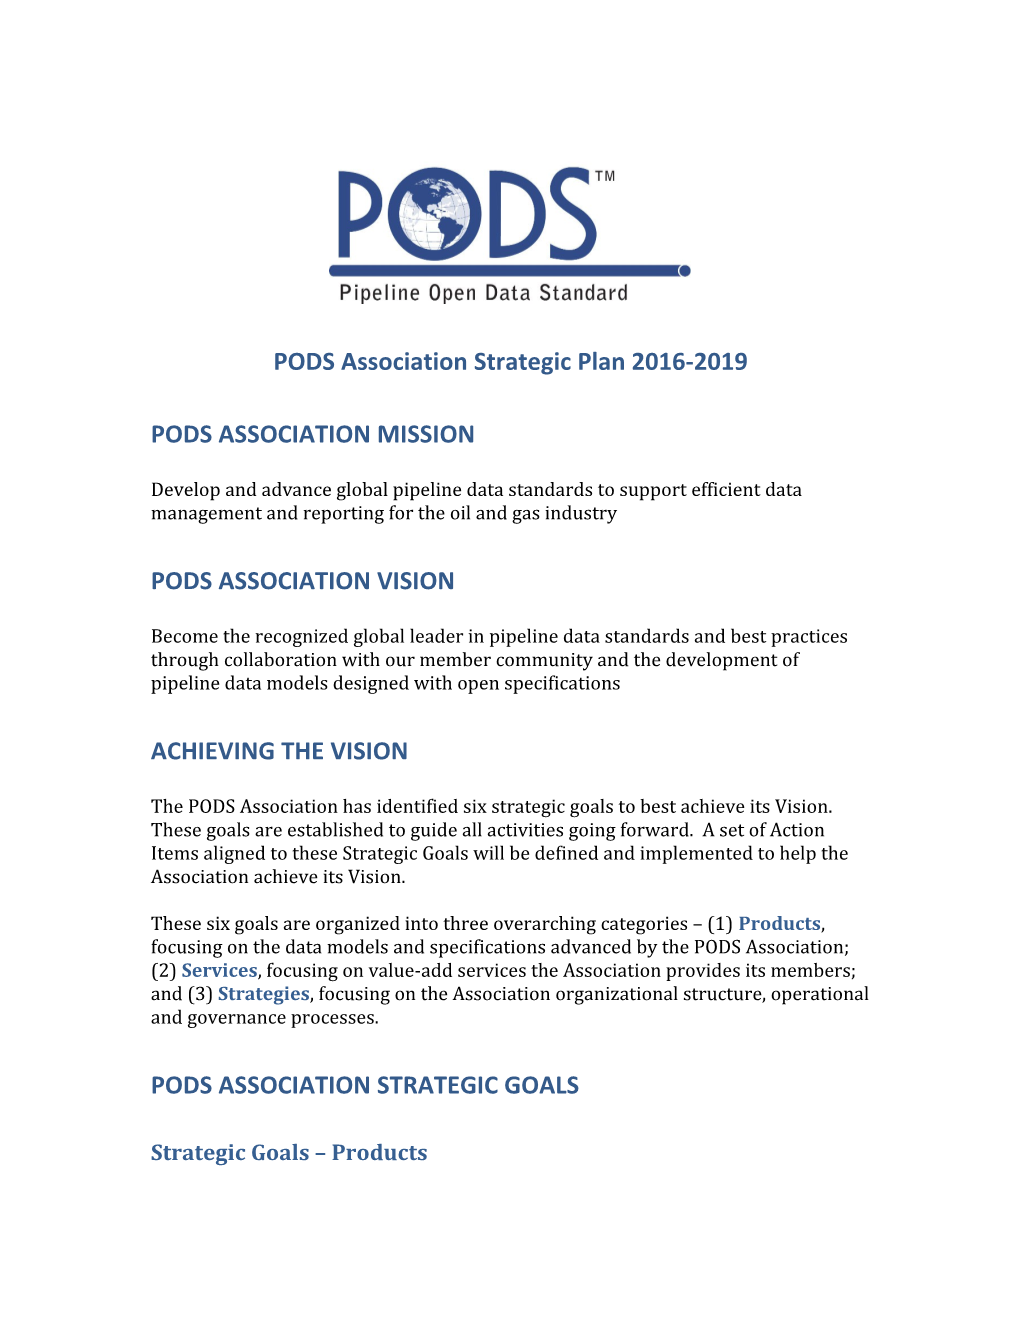 PODS Association Strategic Plan 2016-2019